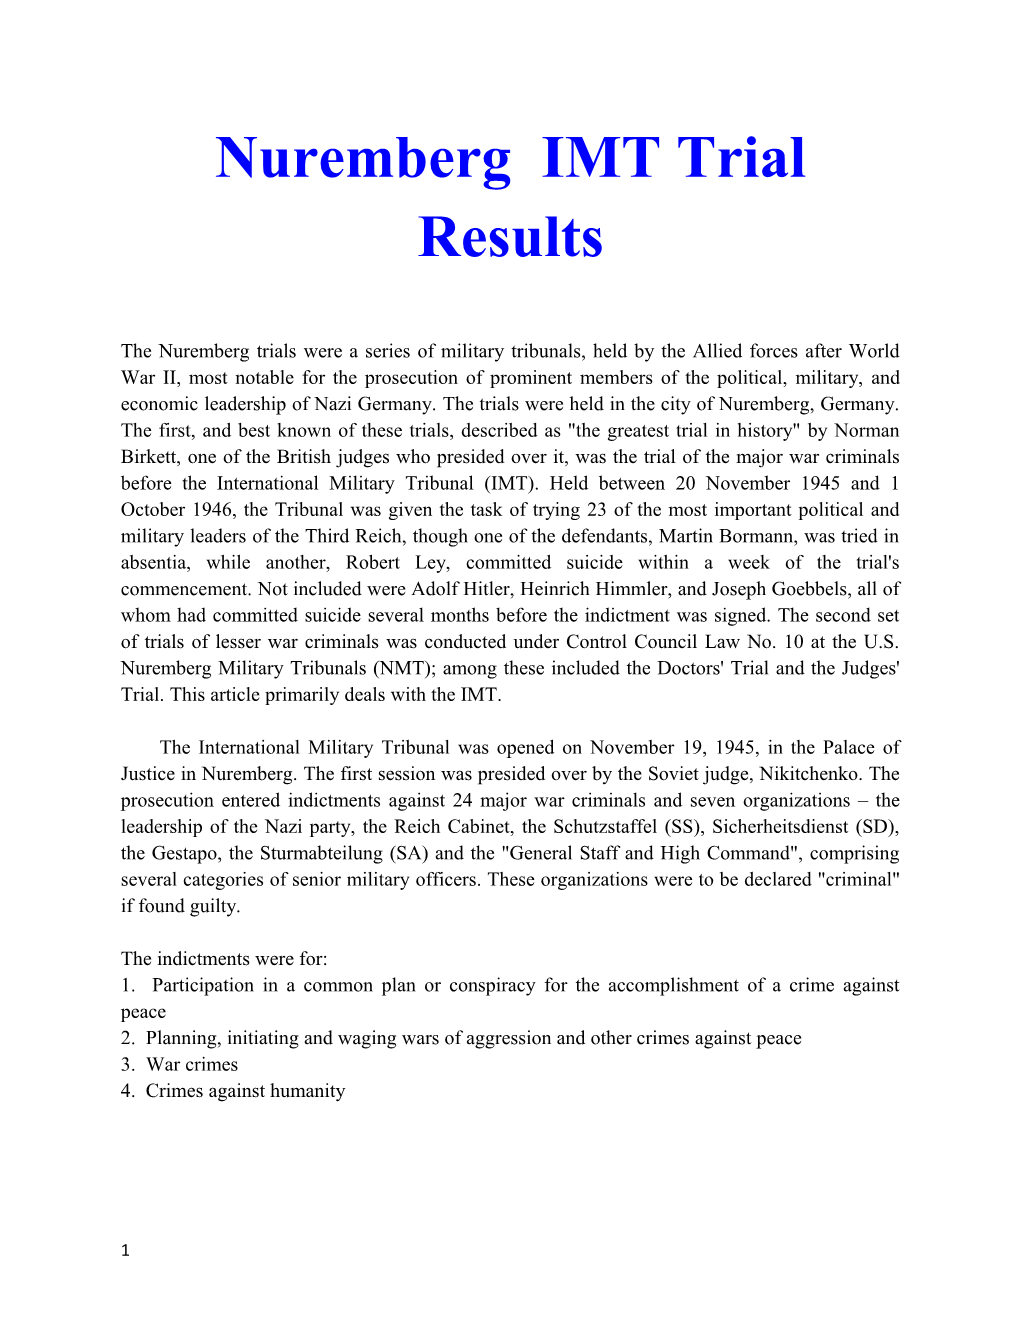 Nuremberg IMT Trial Results